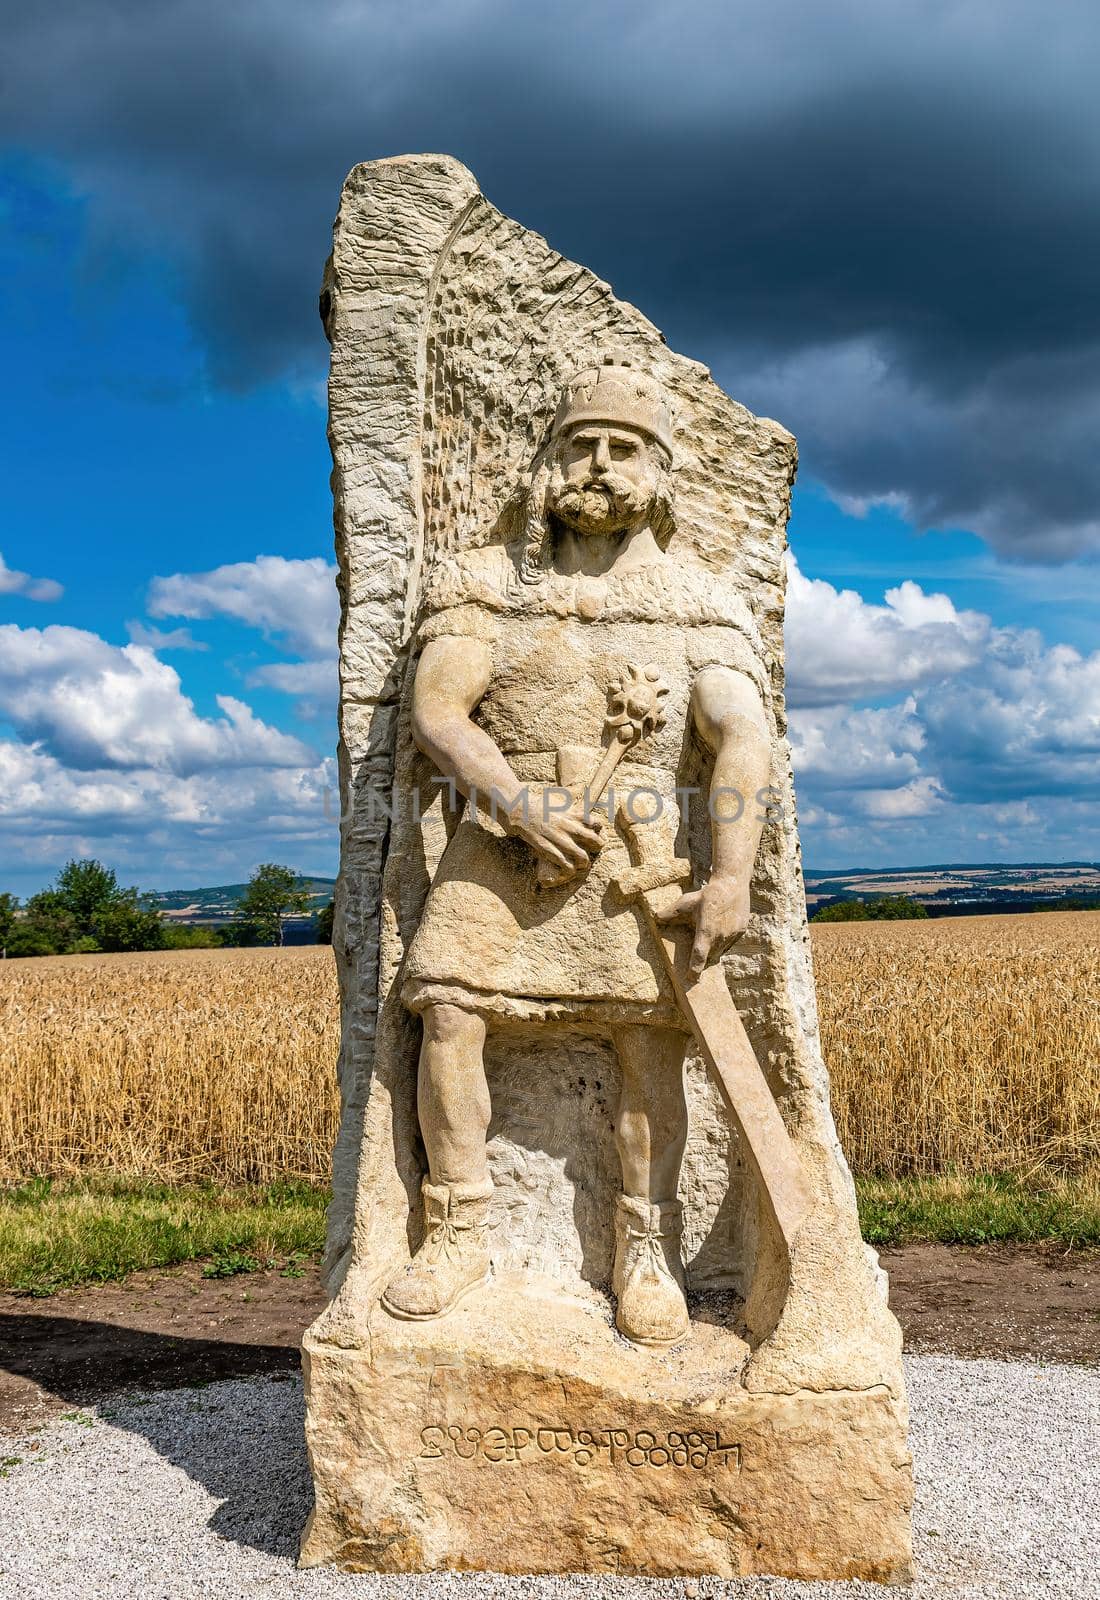 The statue of the Moravian prince Svatopluk on the pilgrimage hill Naklo near Ratiskovice by rostik924